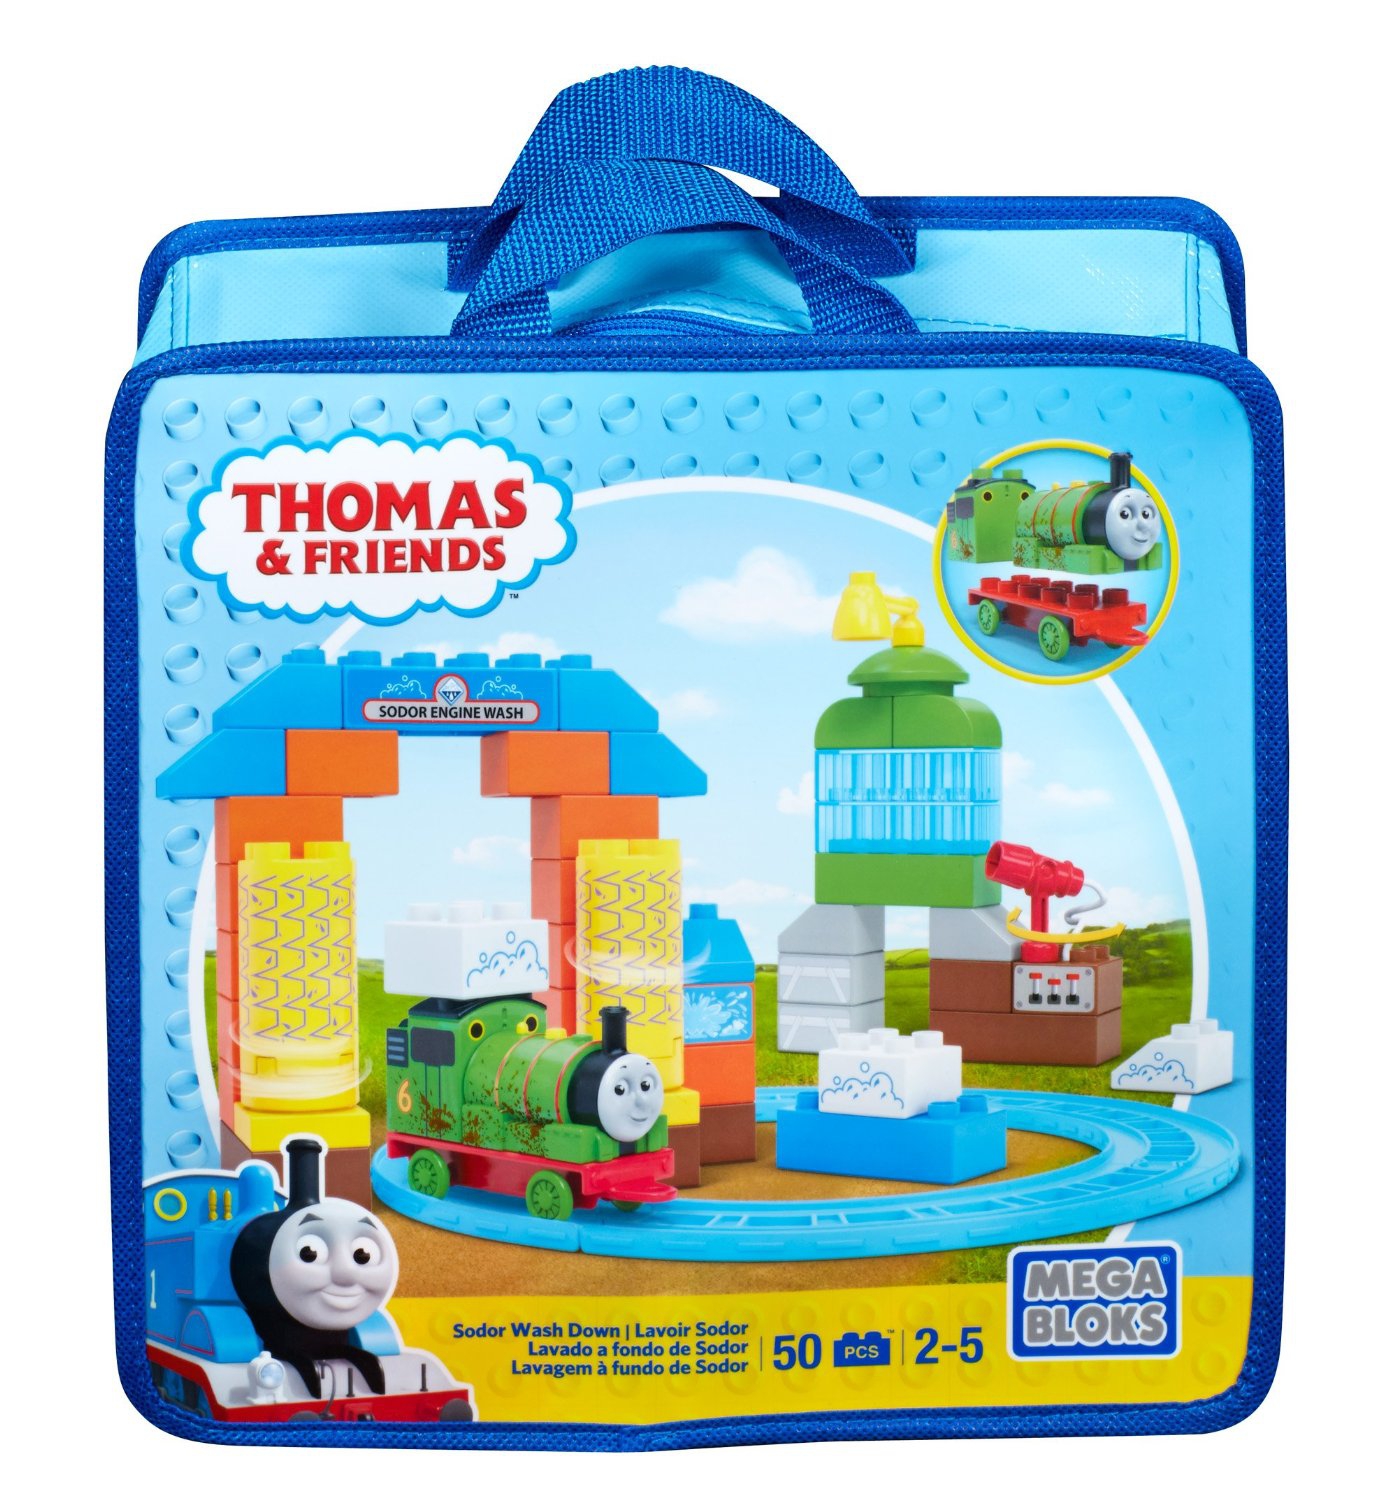 Thomas & Friends 50 Piece 'Mega Bloks' Blocks Toy